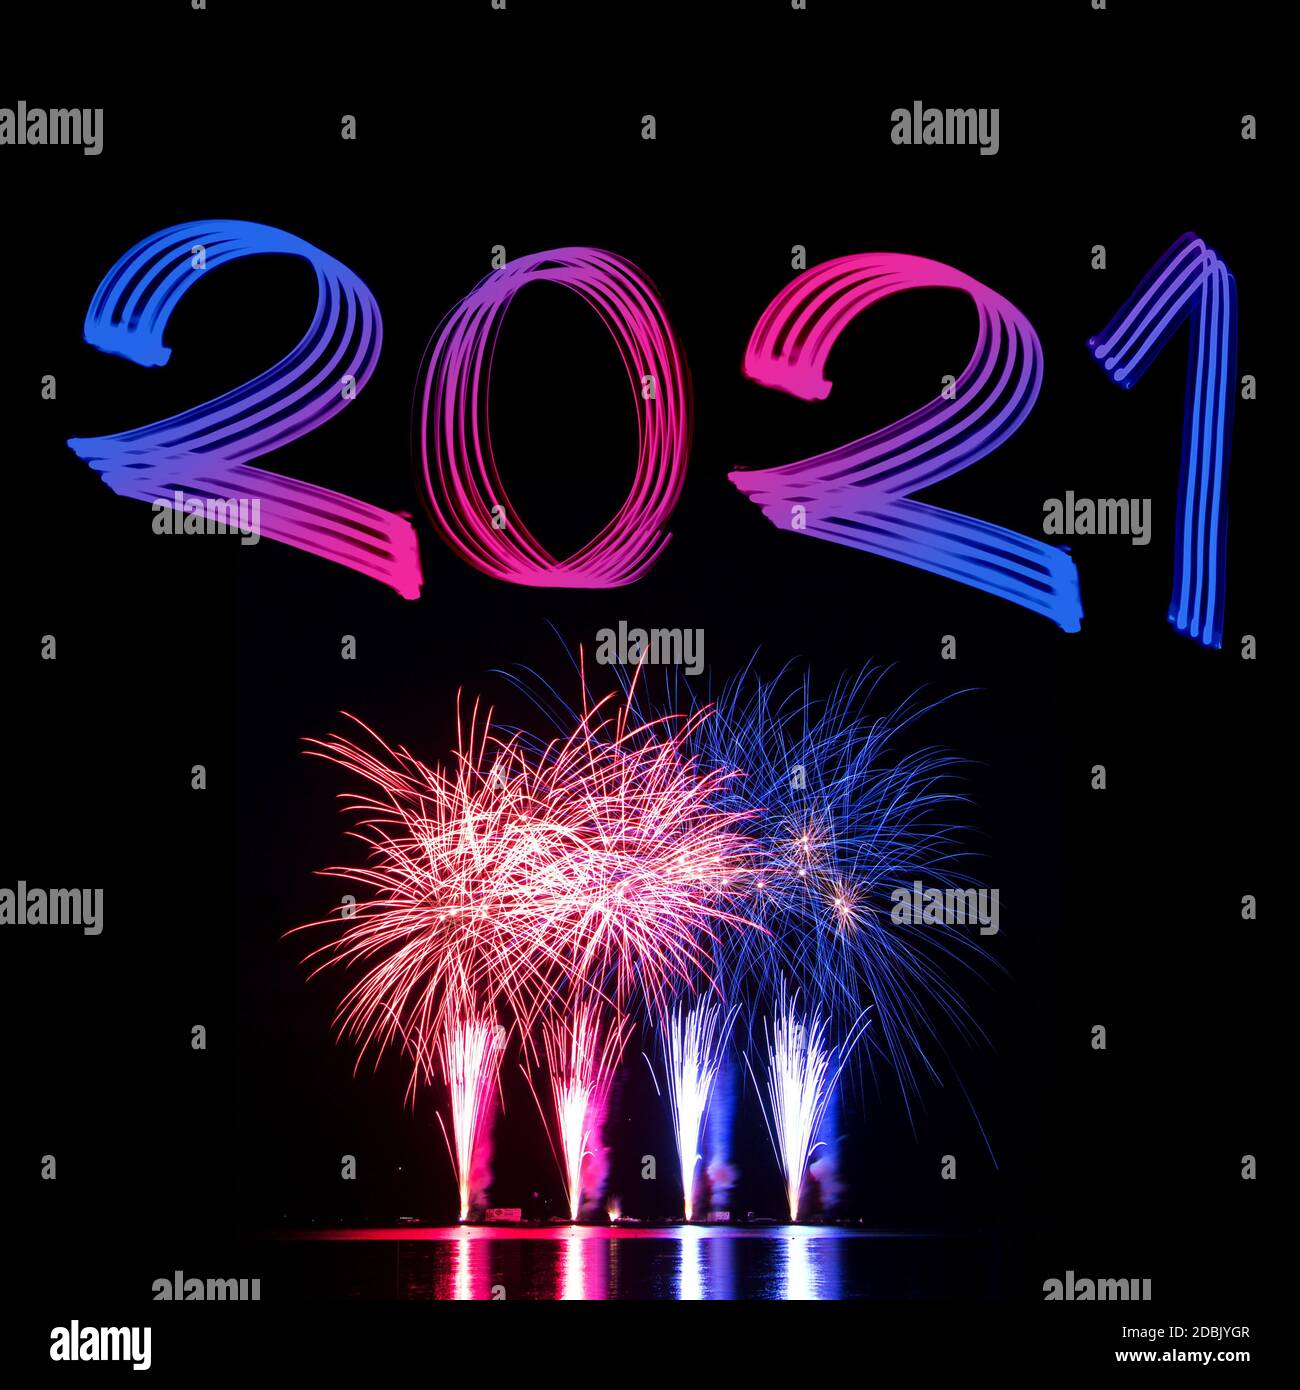 2021 Happy New Year Fireworks Display Stock Photo